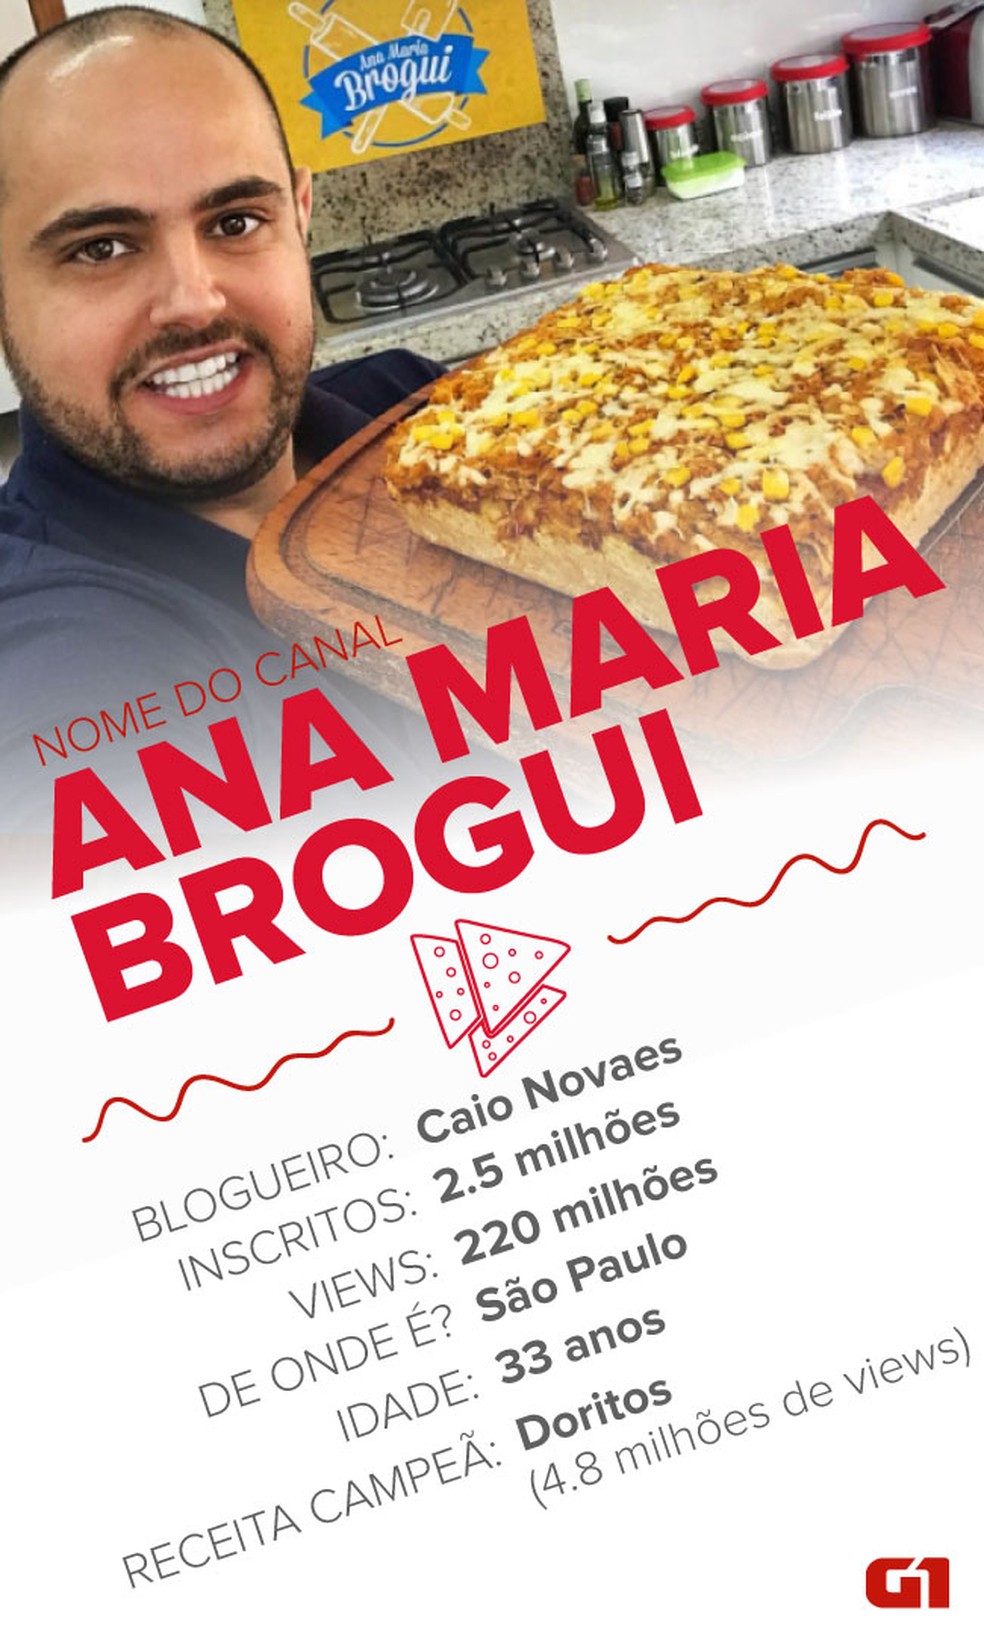 Ana Maria Brogui